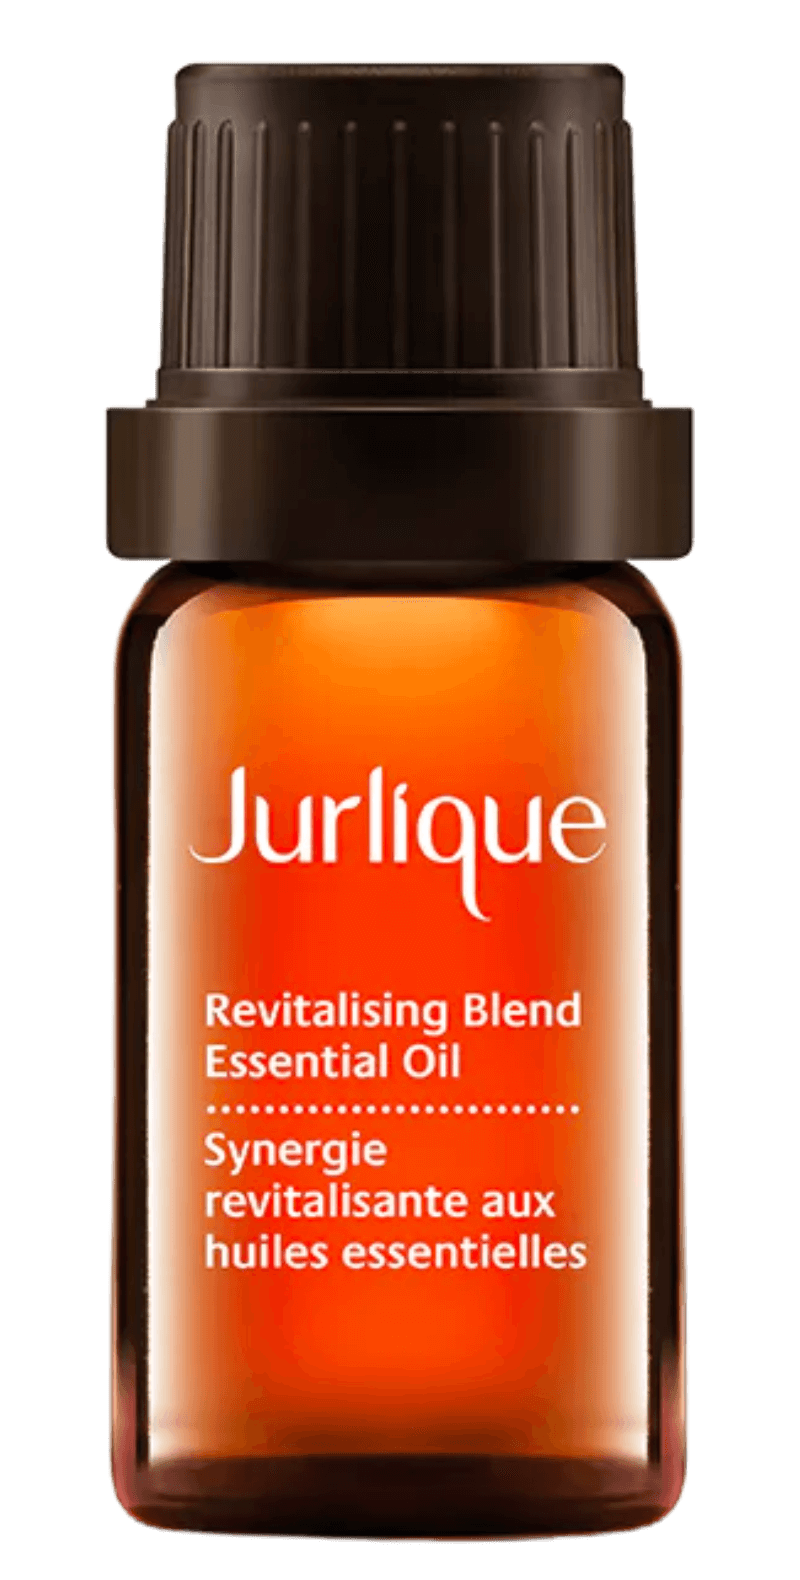 Jurlique Revitalizing Blend Essential Oil